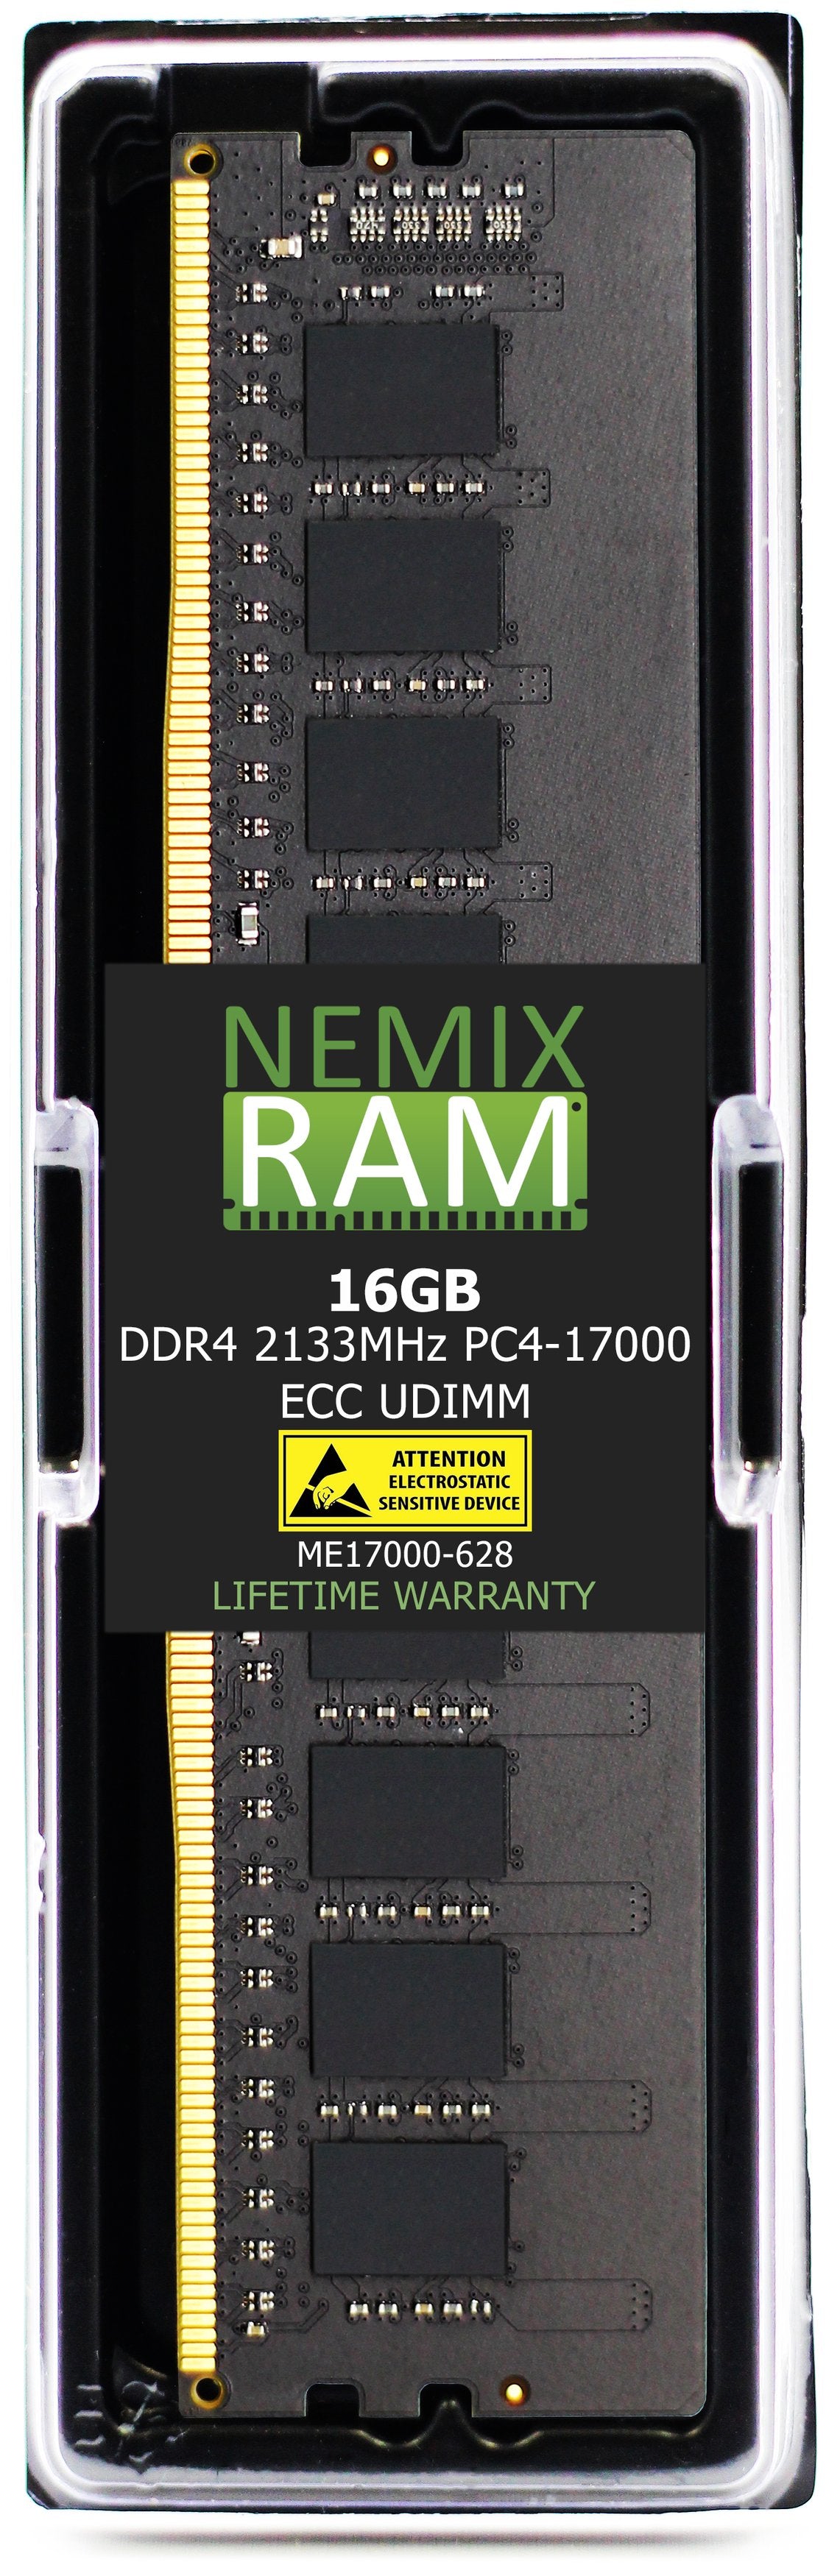 16GB DDR4 2133MHZ PC4-17000 ECC UDIMM Compatible with Supermicro MEM-DR416L-SL01-EU21